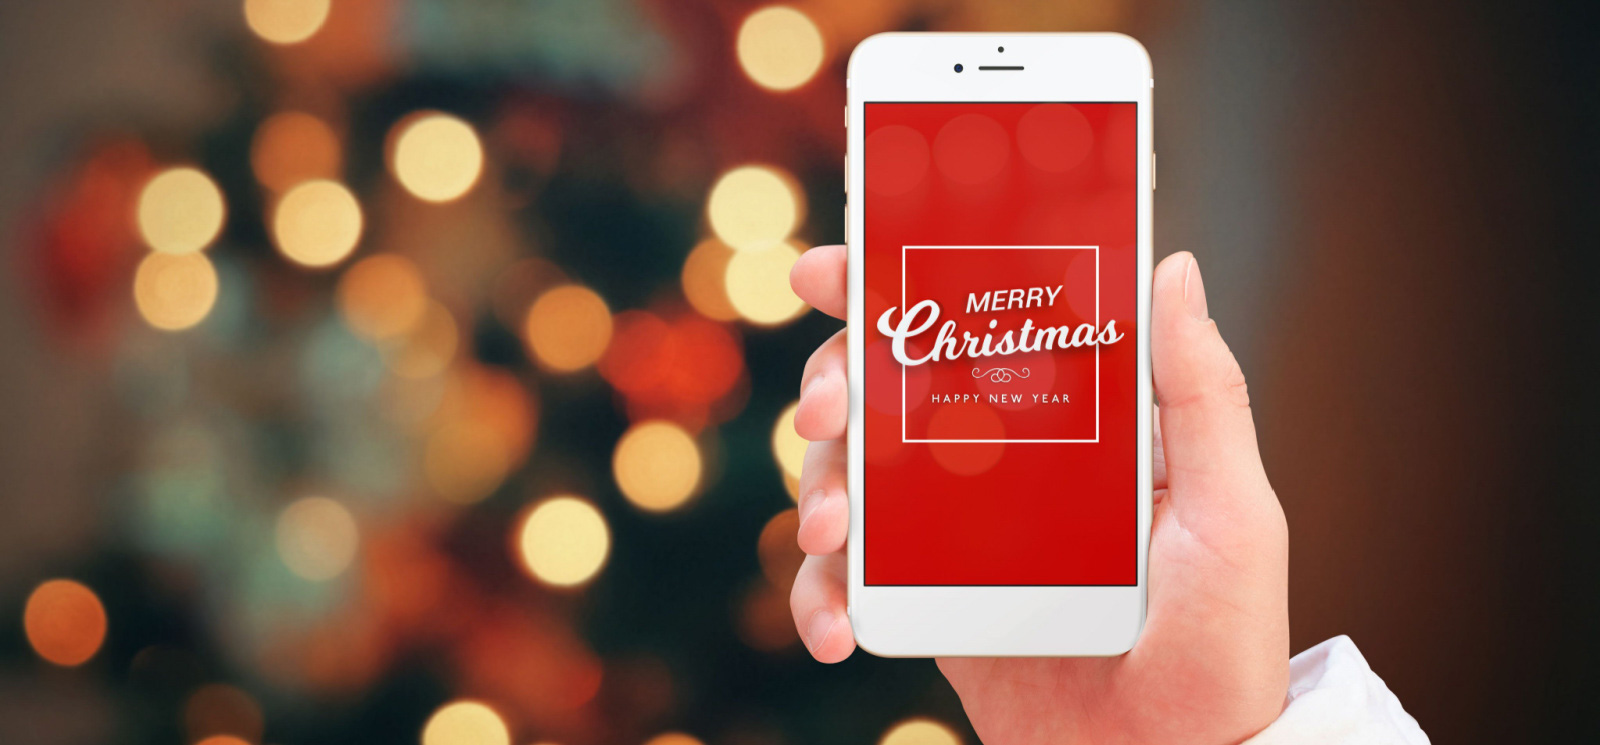 merry christmas on mobile phone